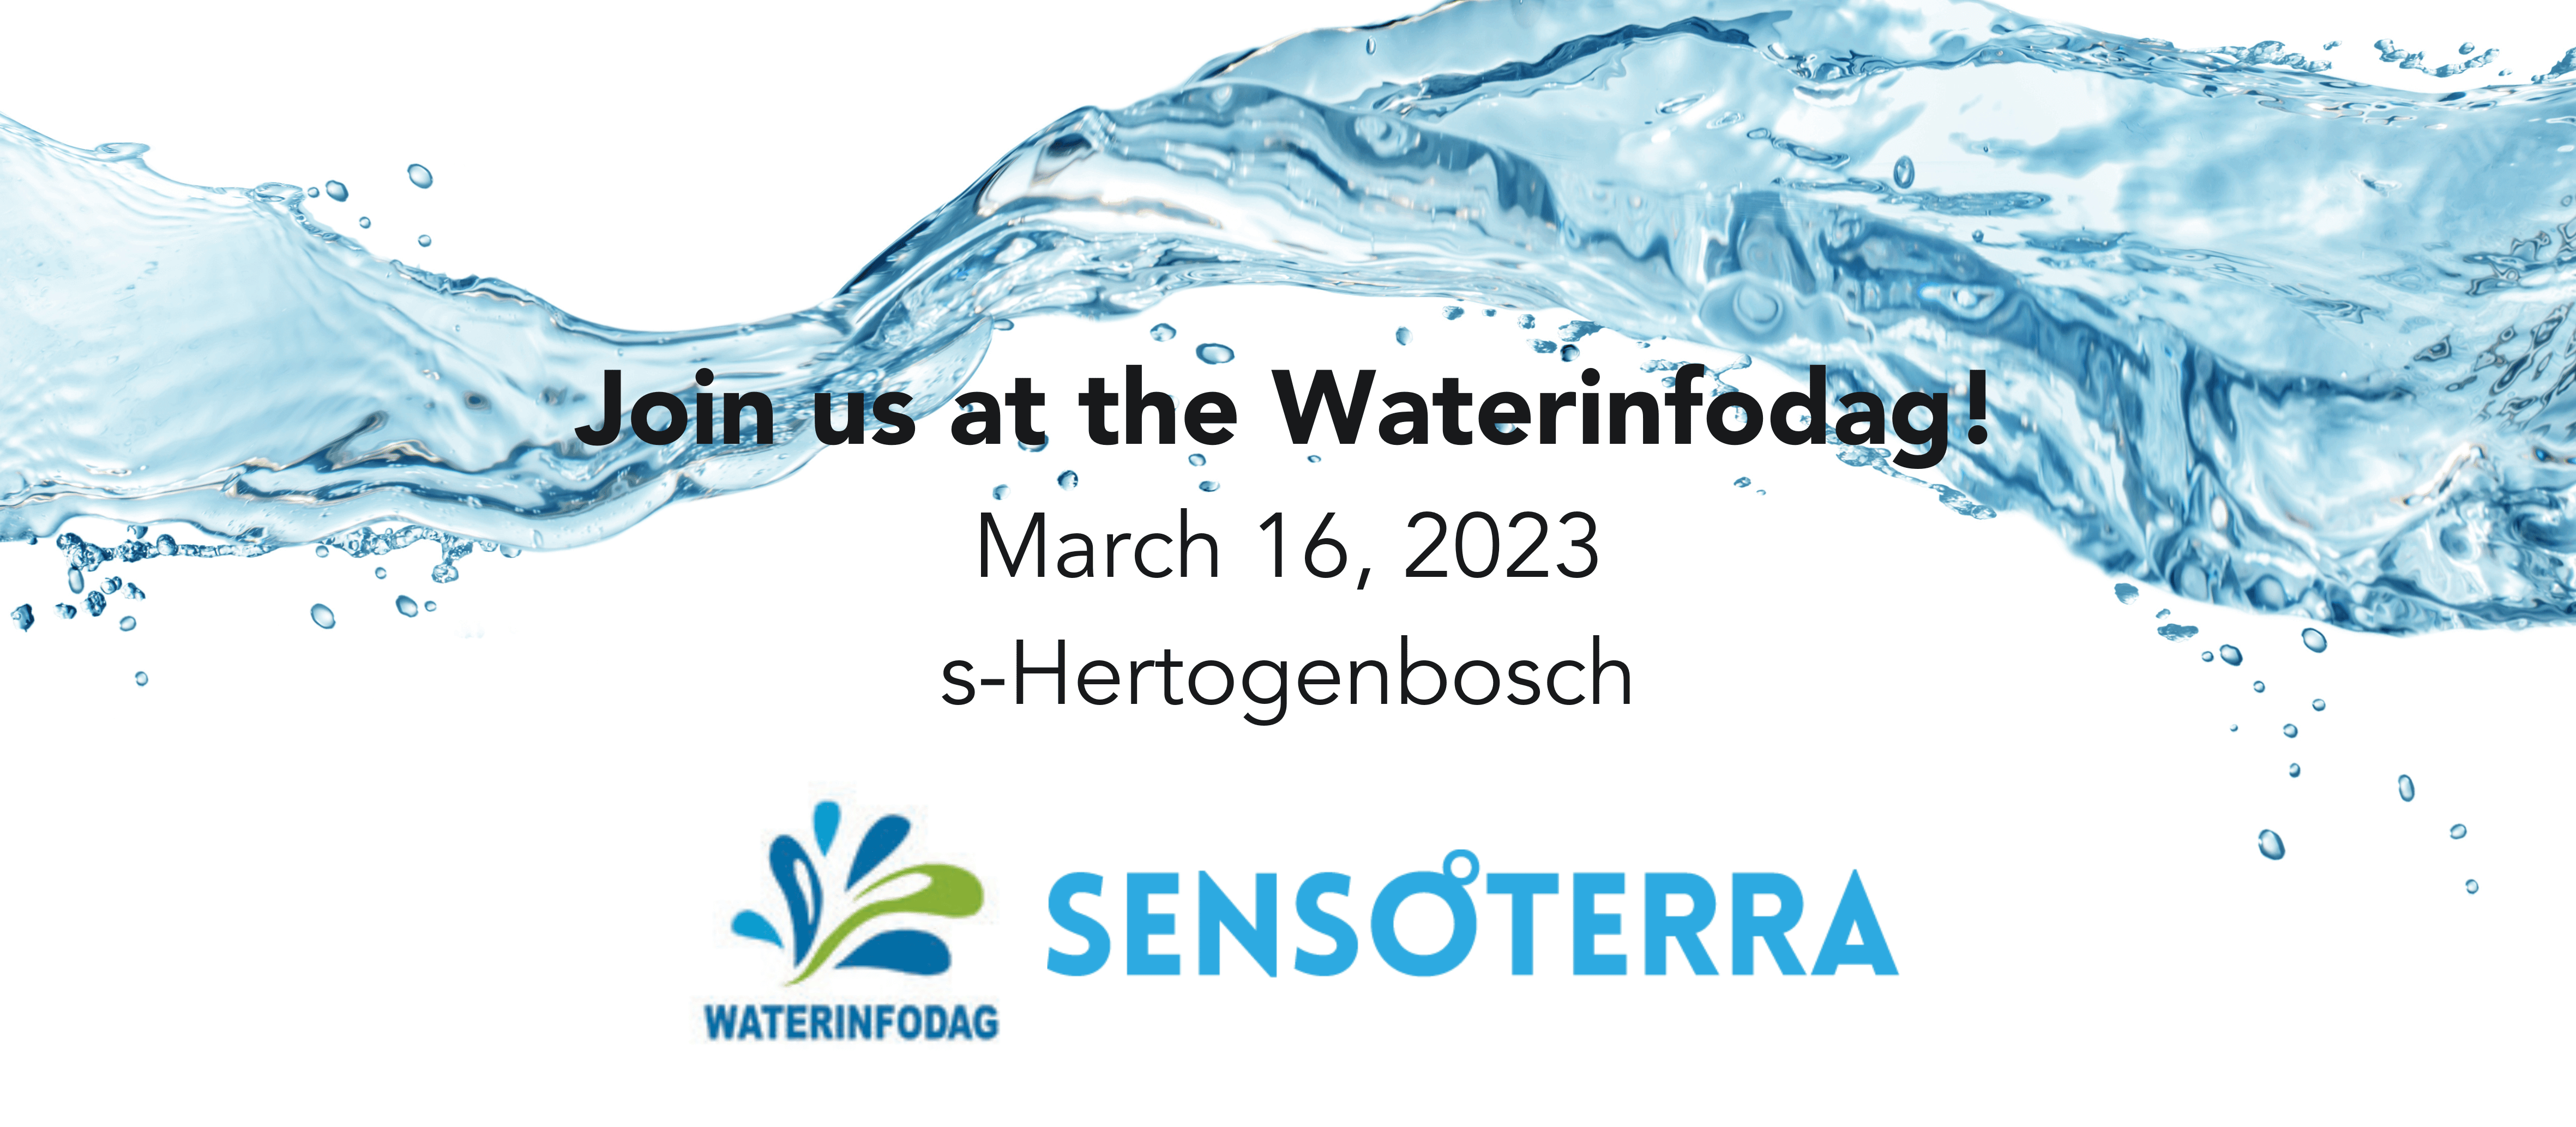 Sensoterra at the Waterinfodag March 16, 2023 s-Hertogenbosch